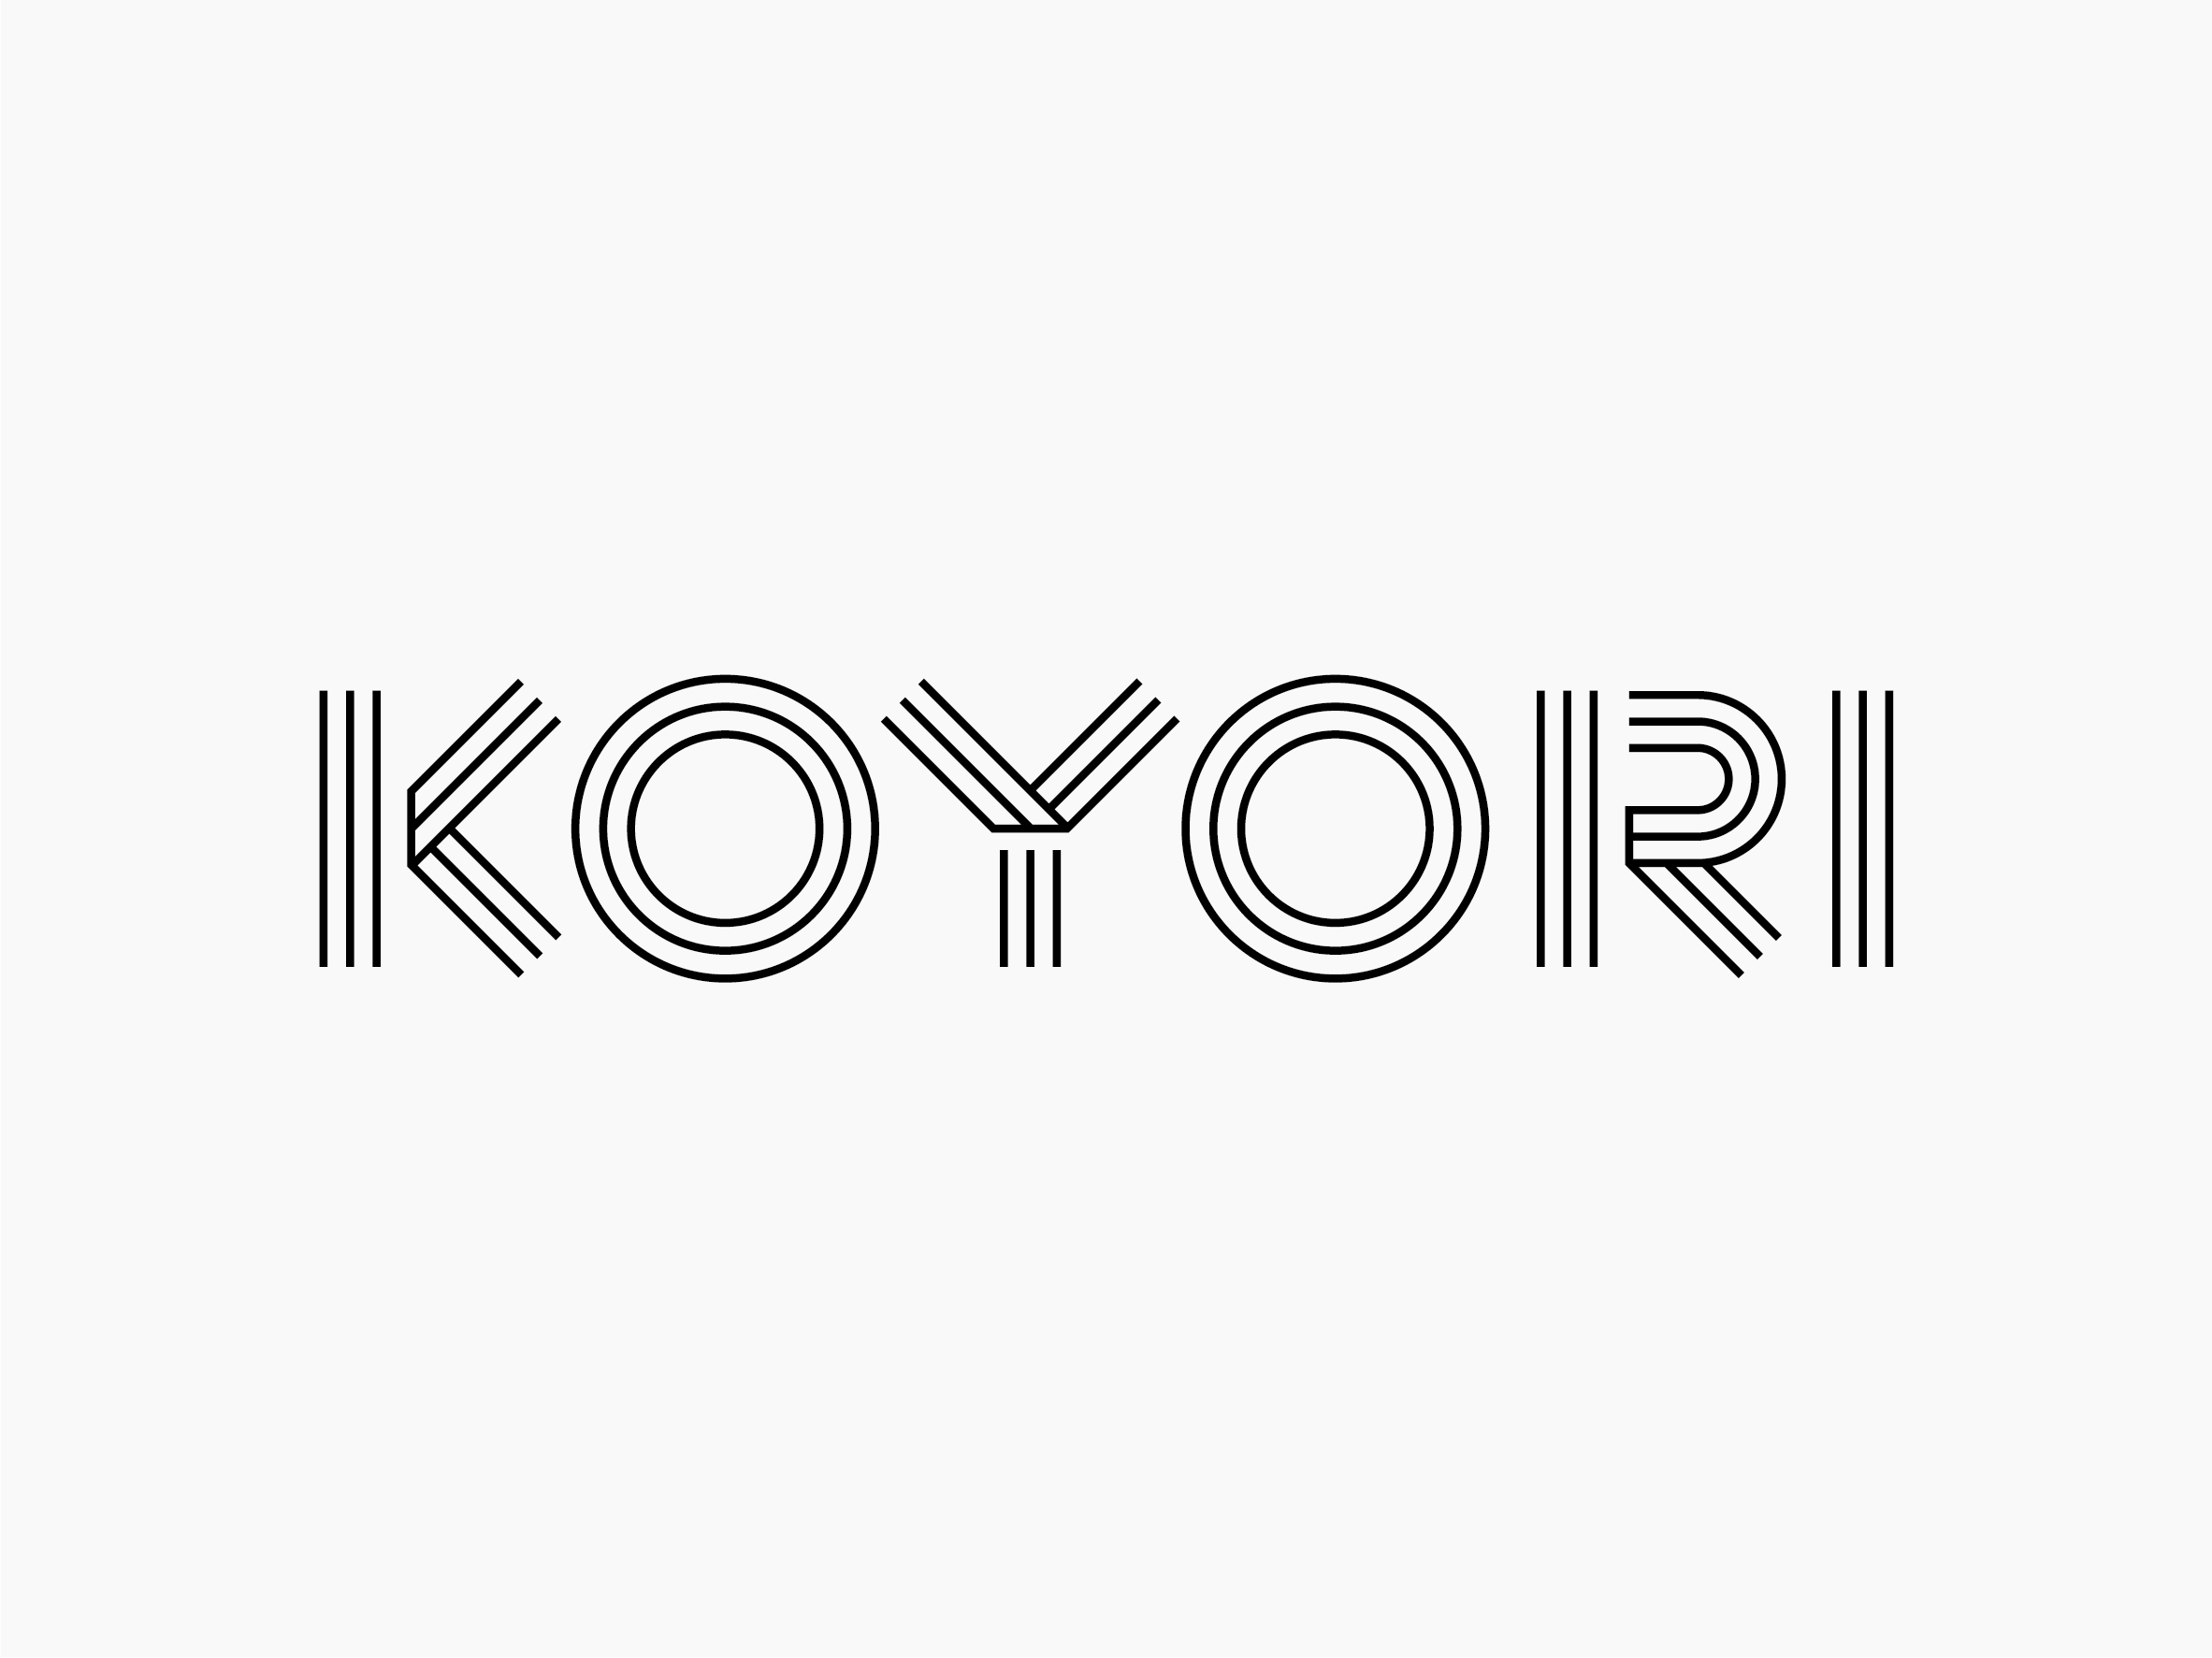 KOYORI logo type